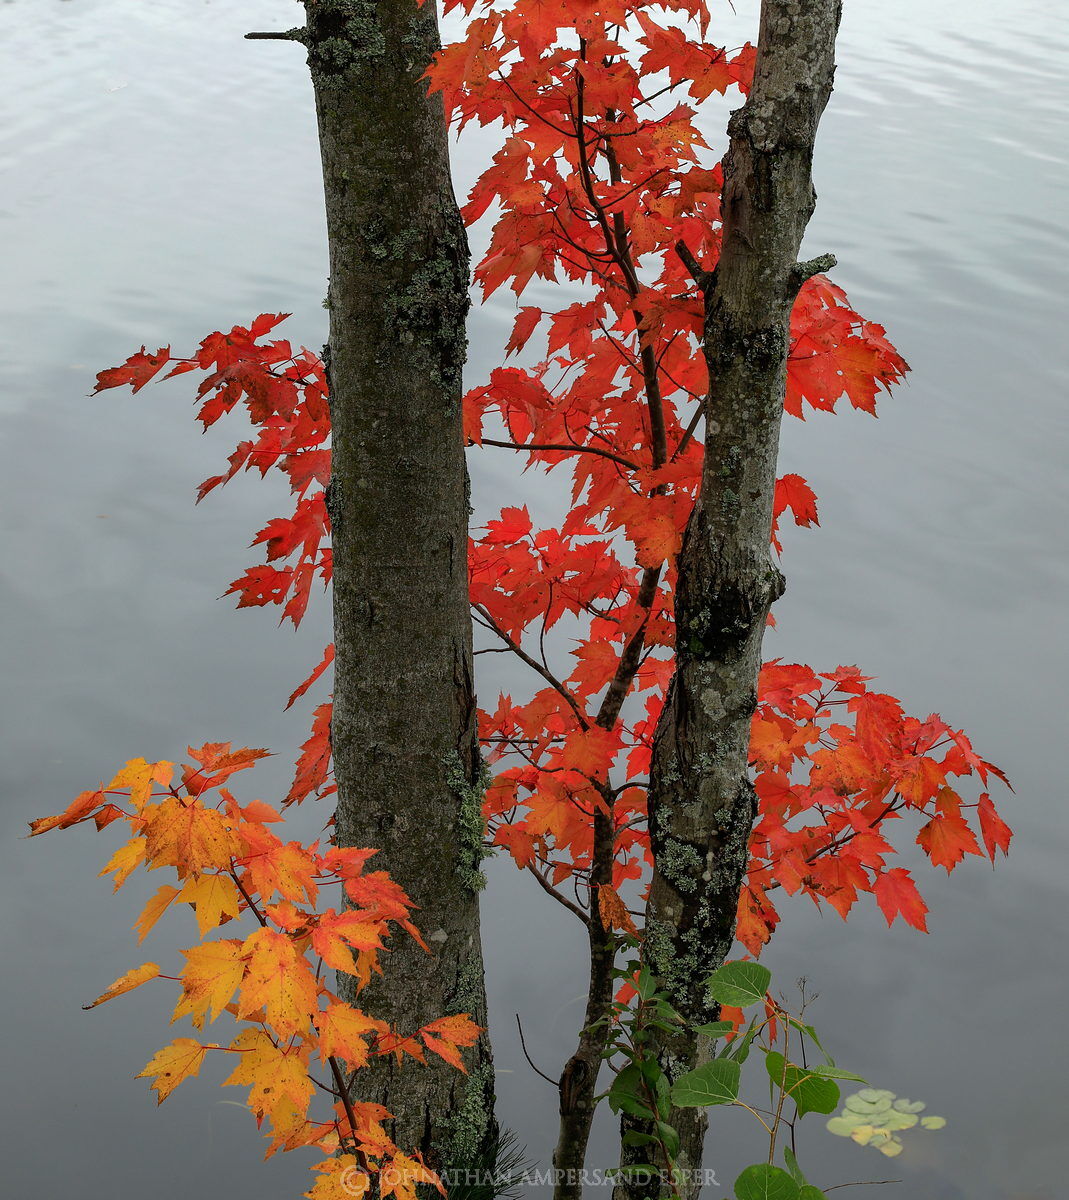 Adirondack Park, Adirondacks, Johnathan Esper, Wildernesscapes Photography,Lake Durant,maples,maple leaves,trunks,maple tree...